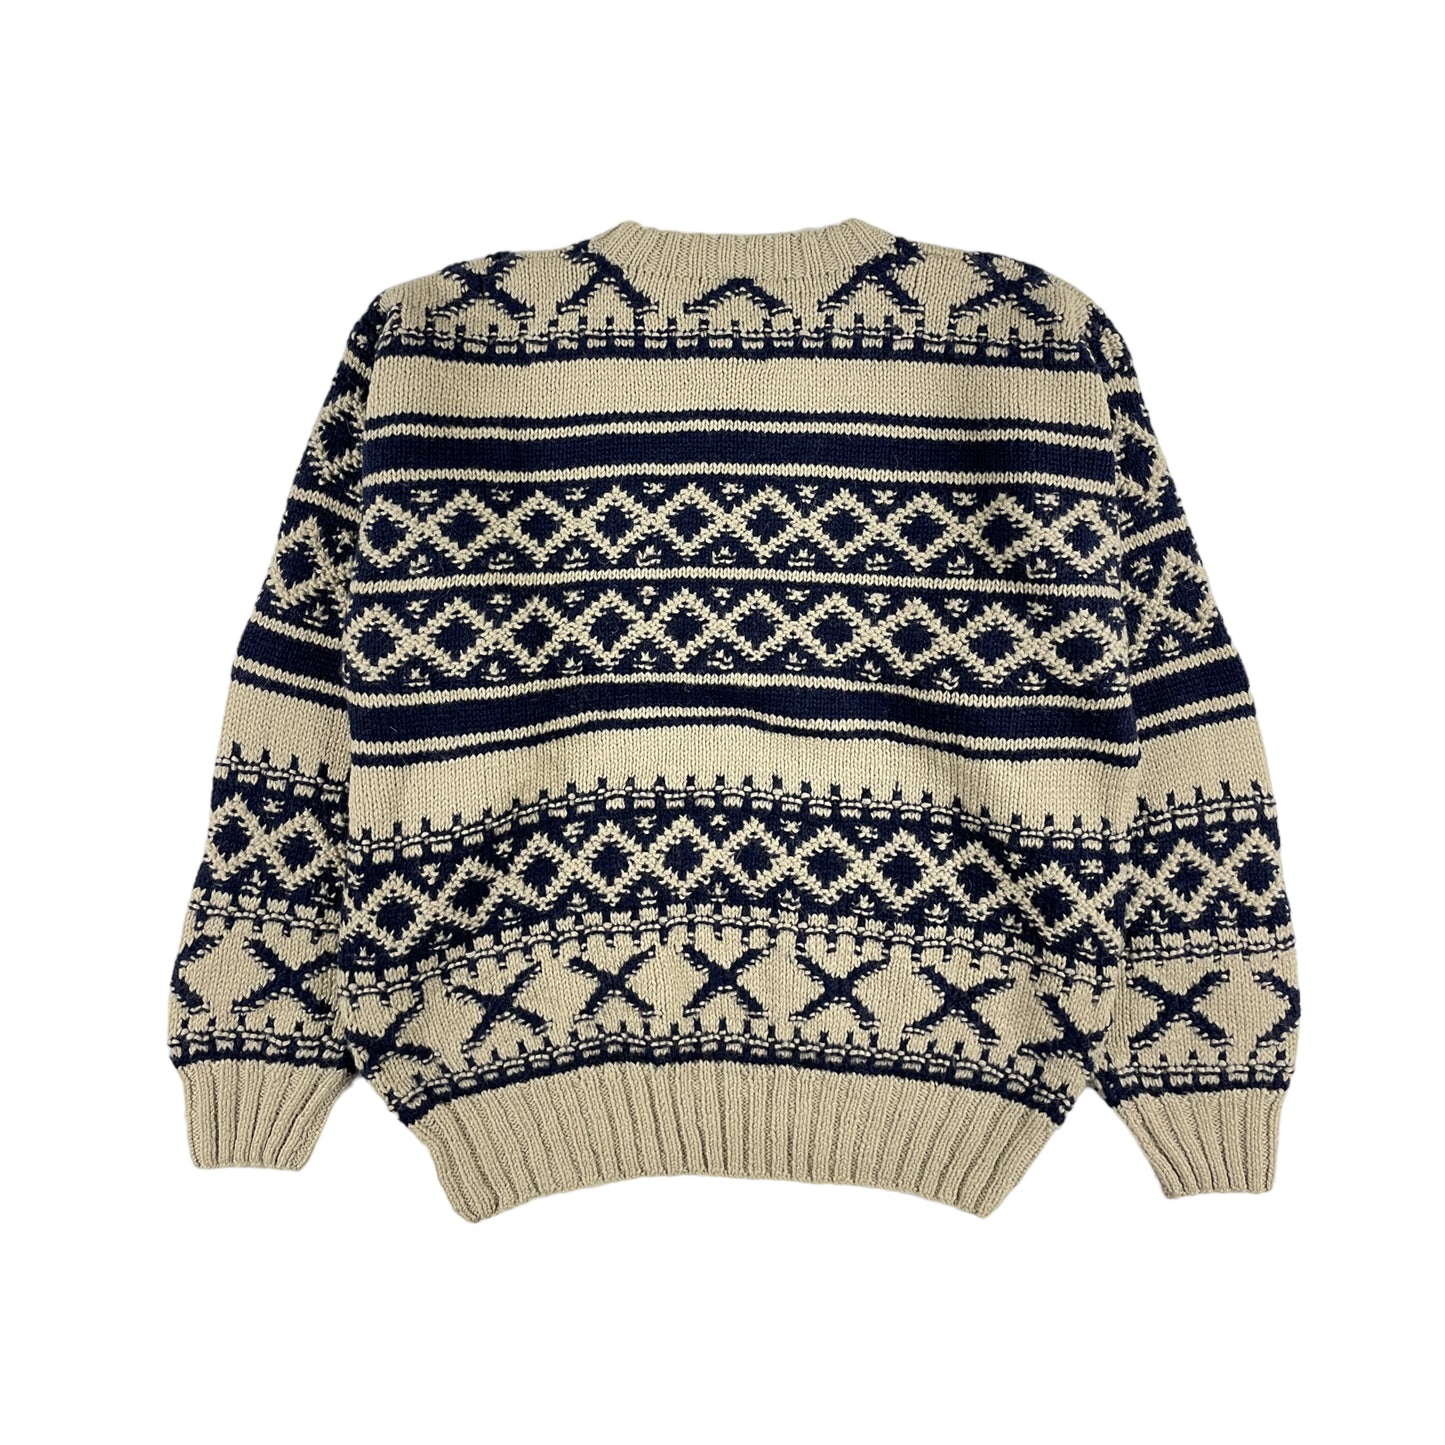 Roger David Knit Sweater